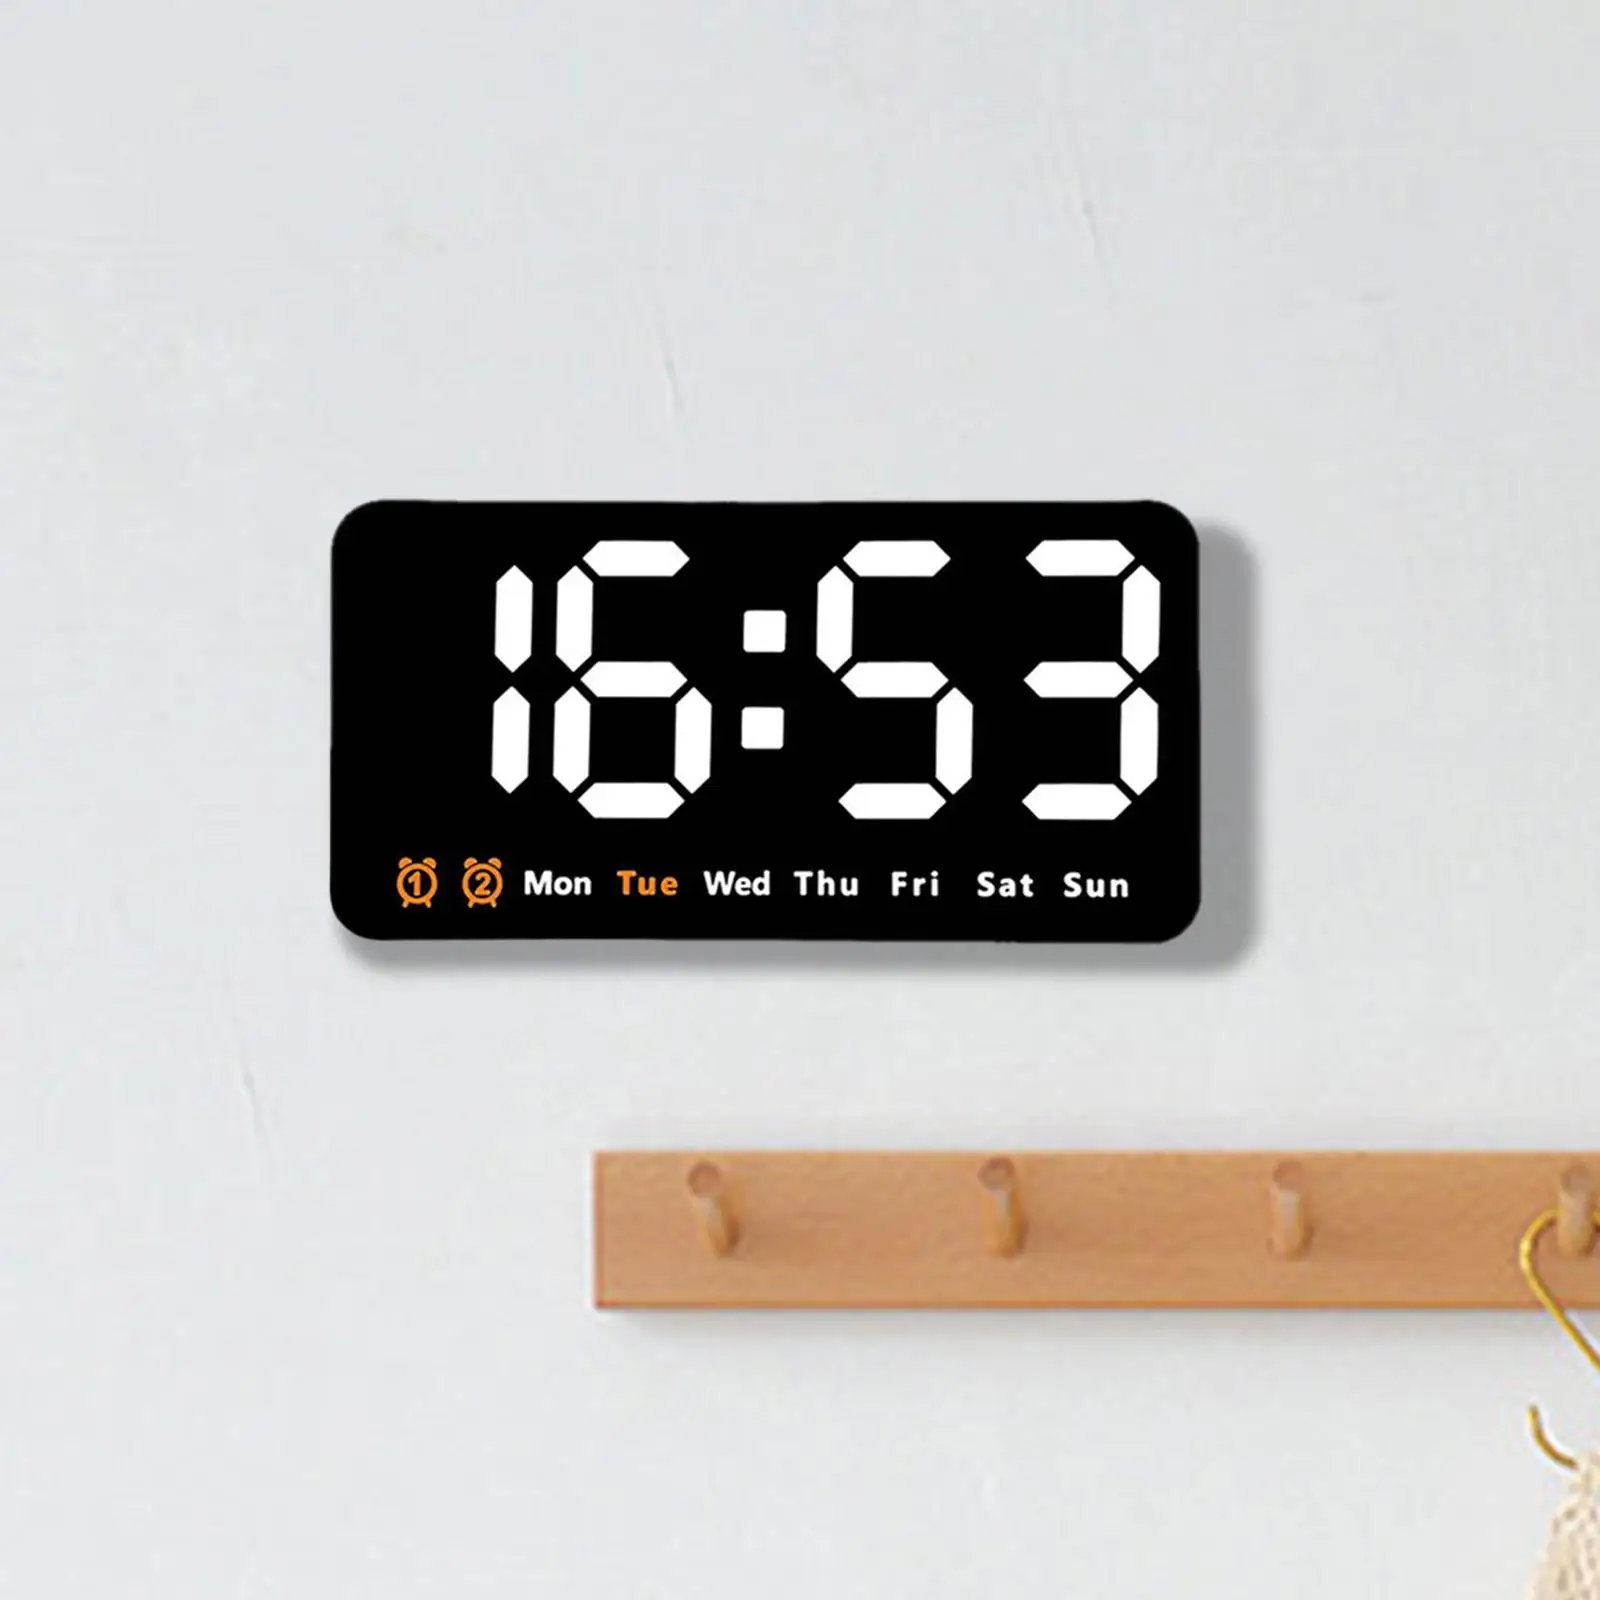 Digital Clock LED Clocks Dimmable LED Desktop Alarm Clock Wall Clock Electronic Clock for Bedroom Adult Learning Festival Beside